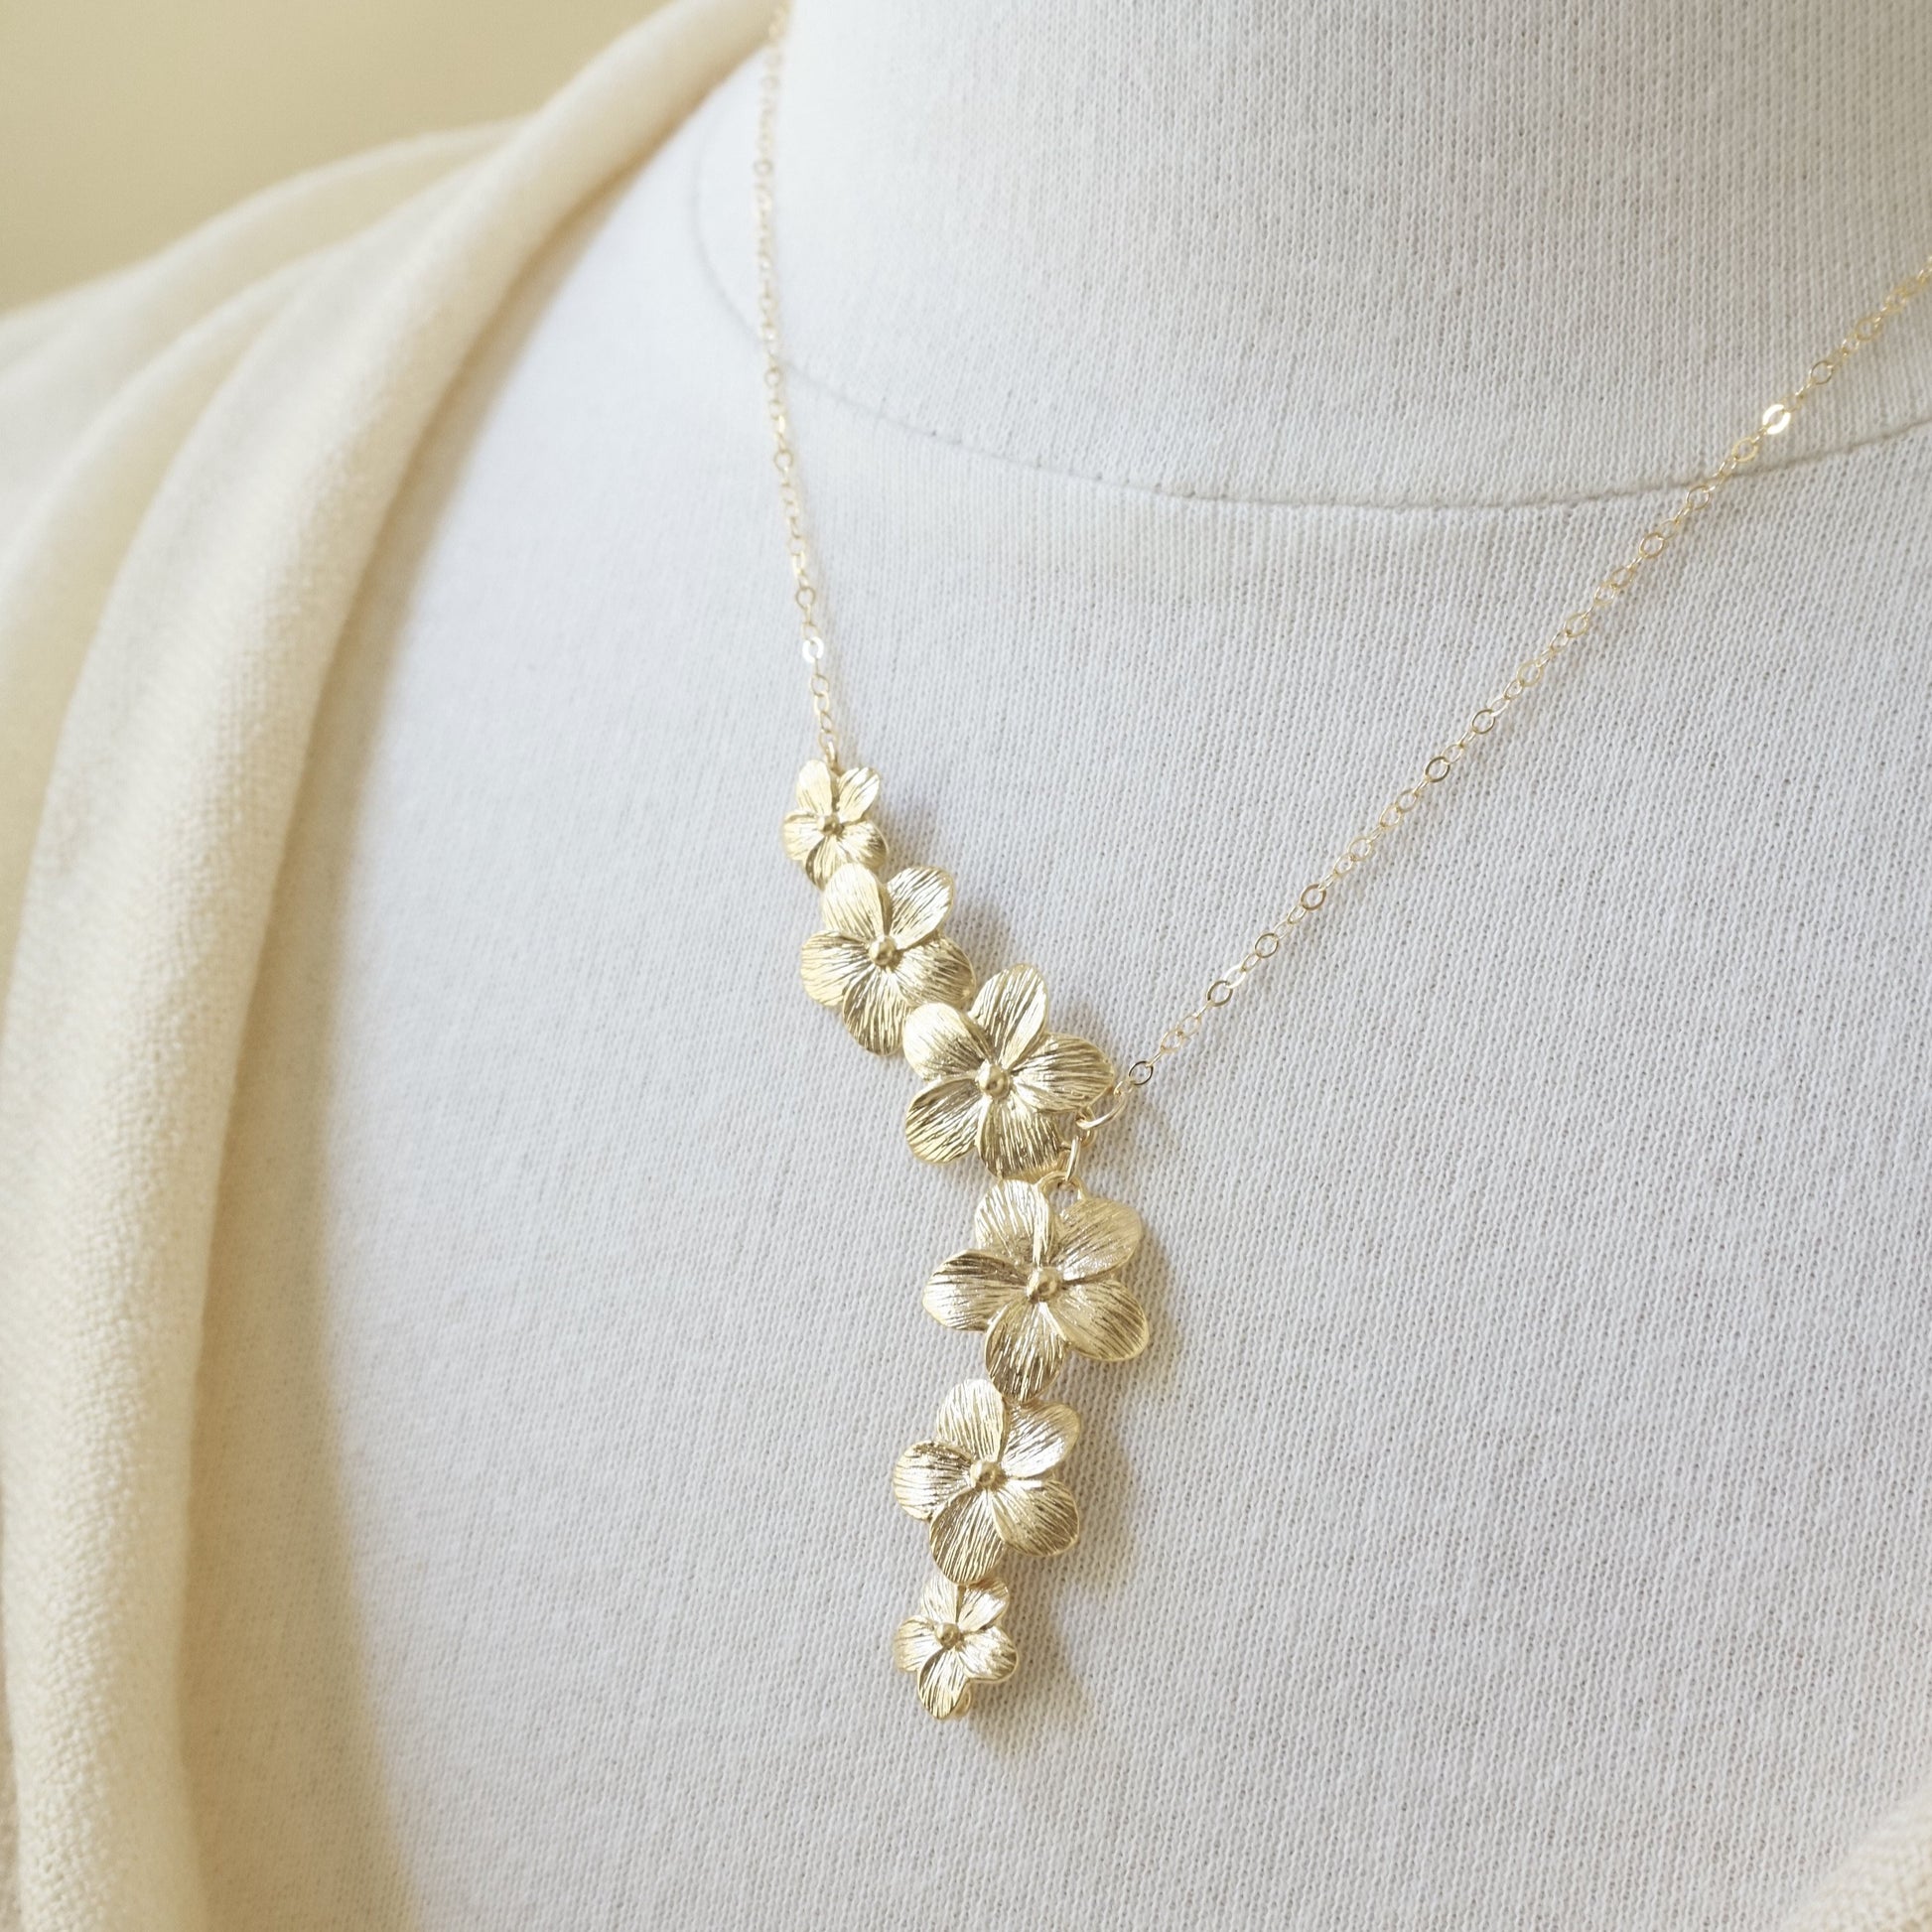 Asymmetrical flower necklace